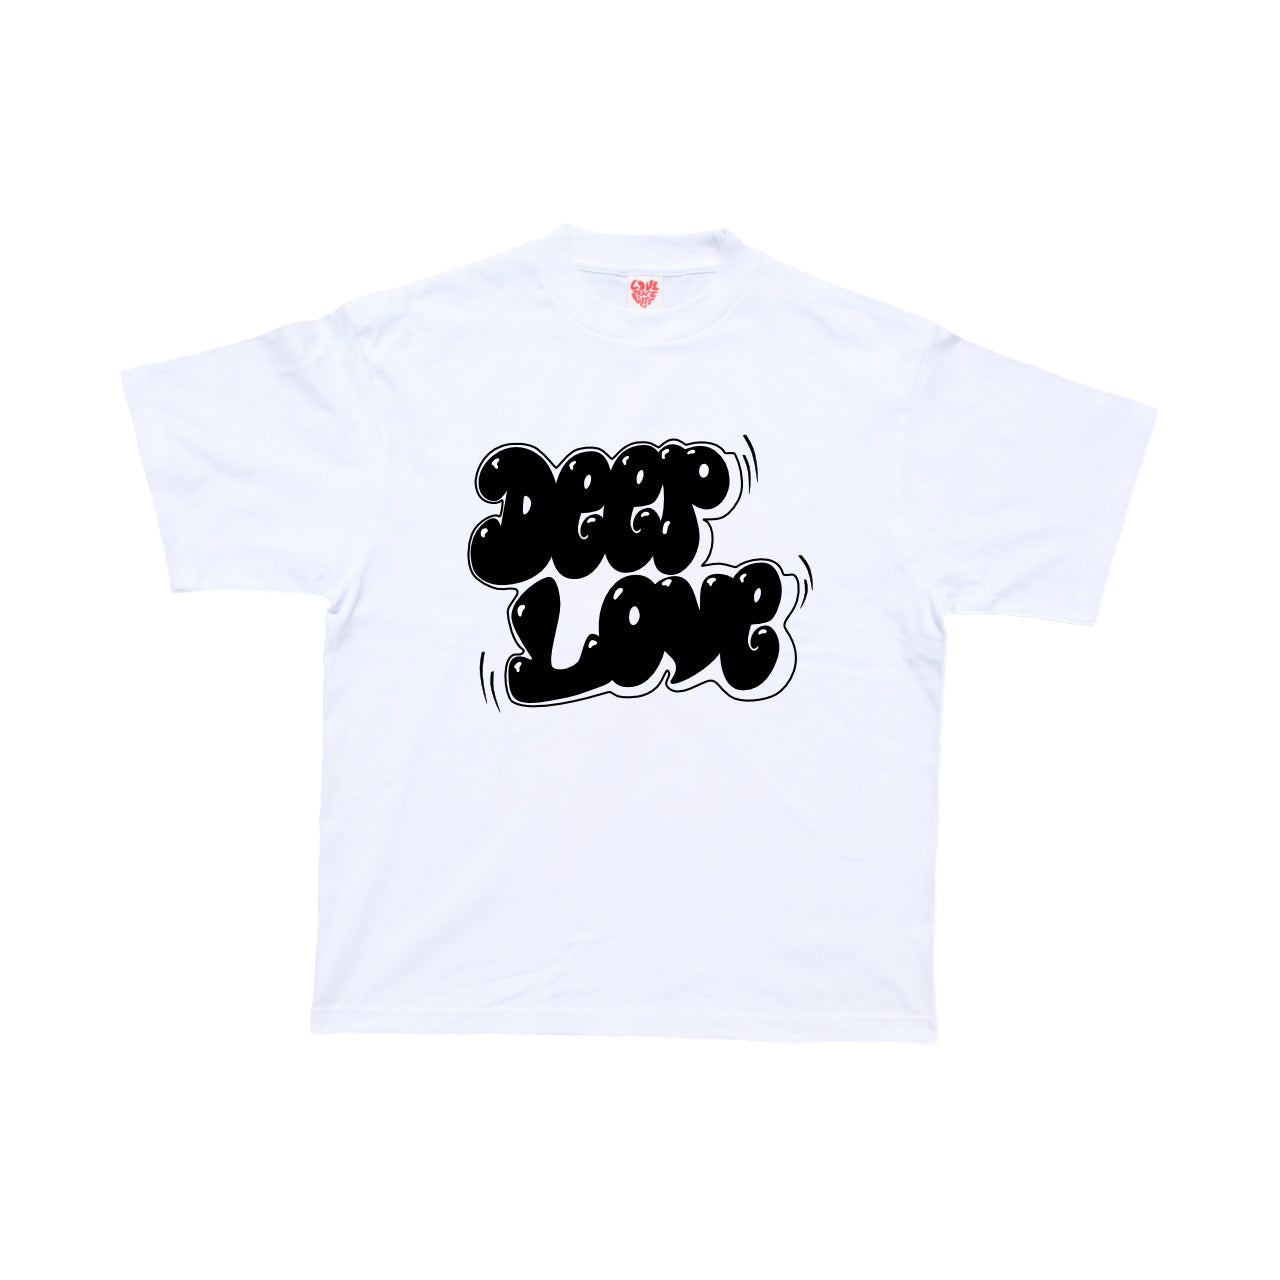 deep love tee in white